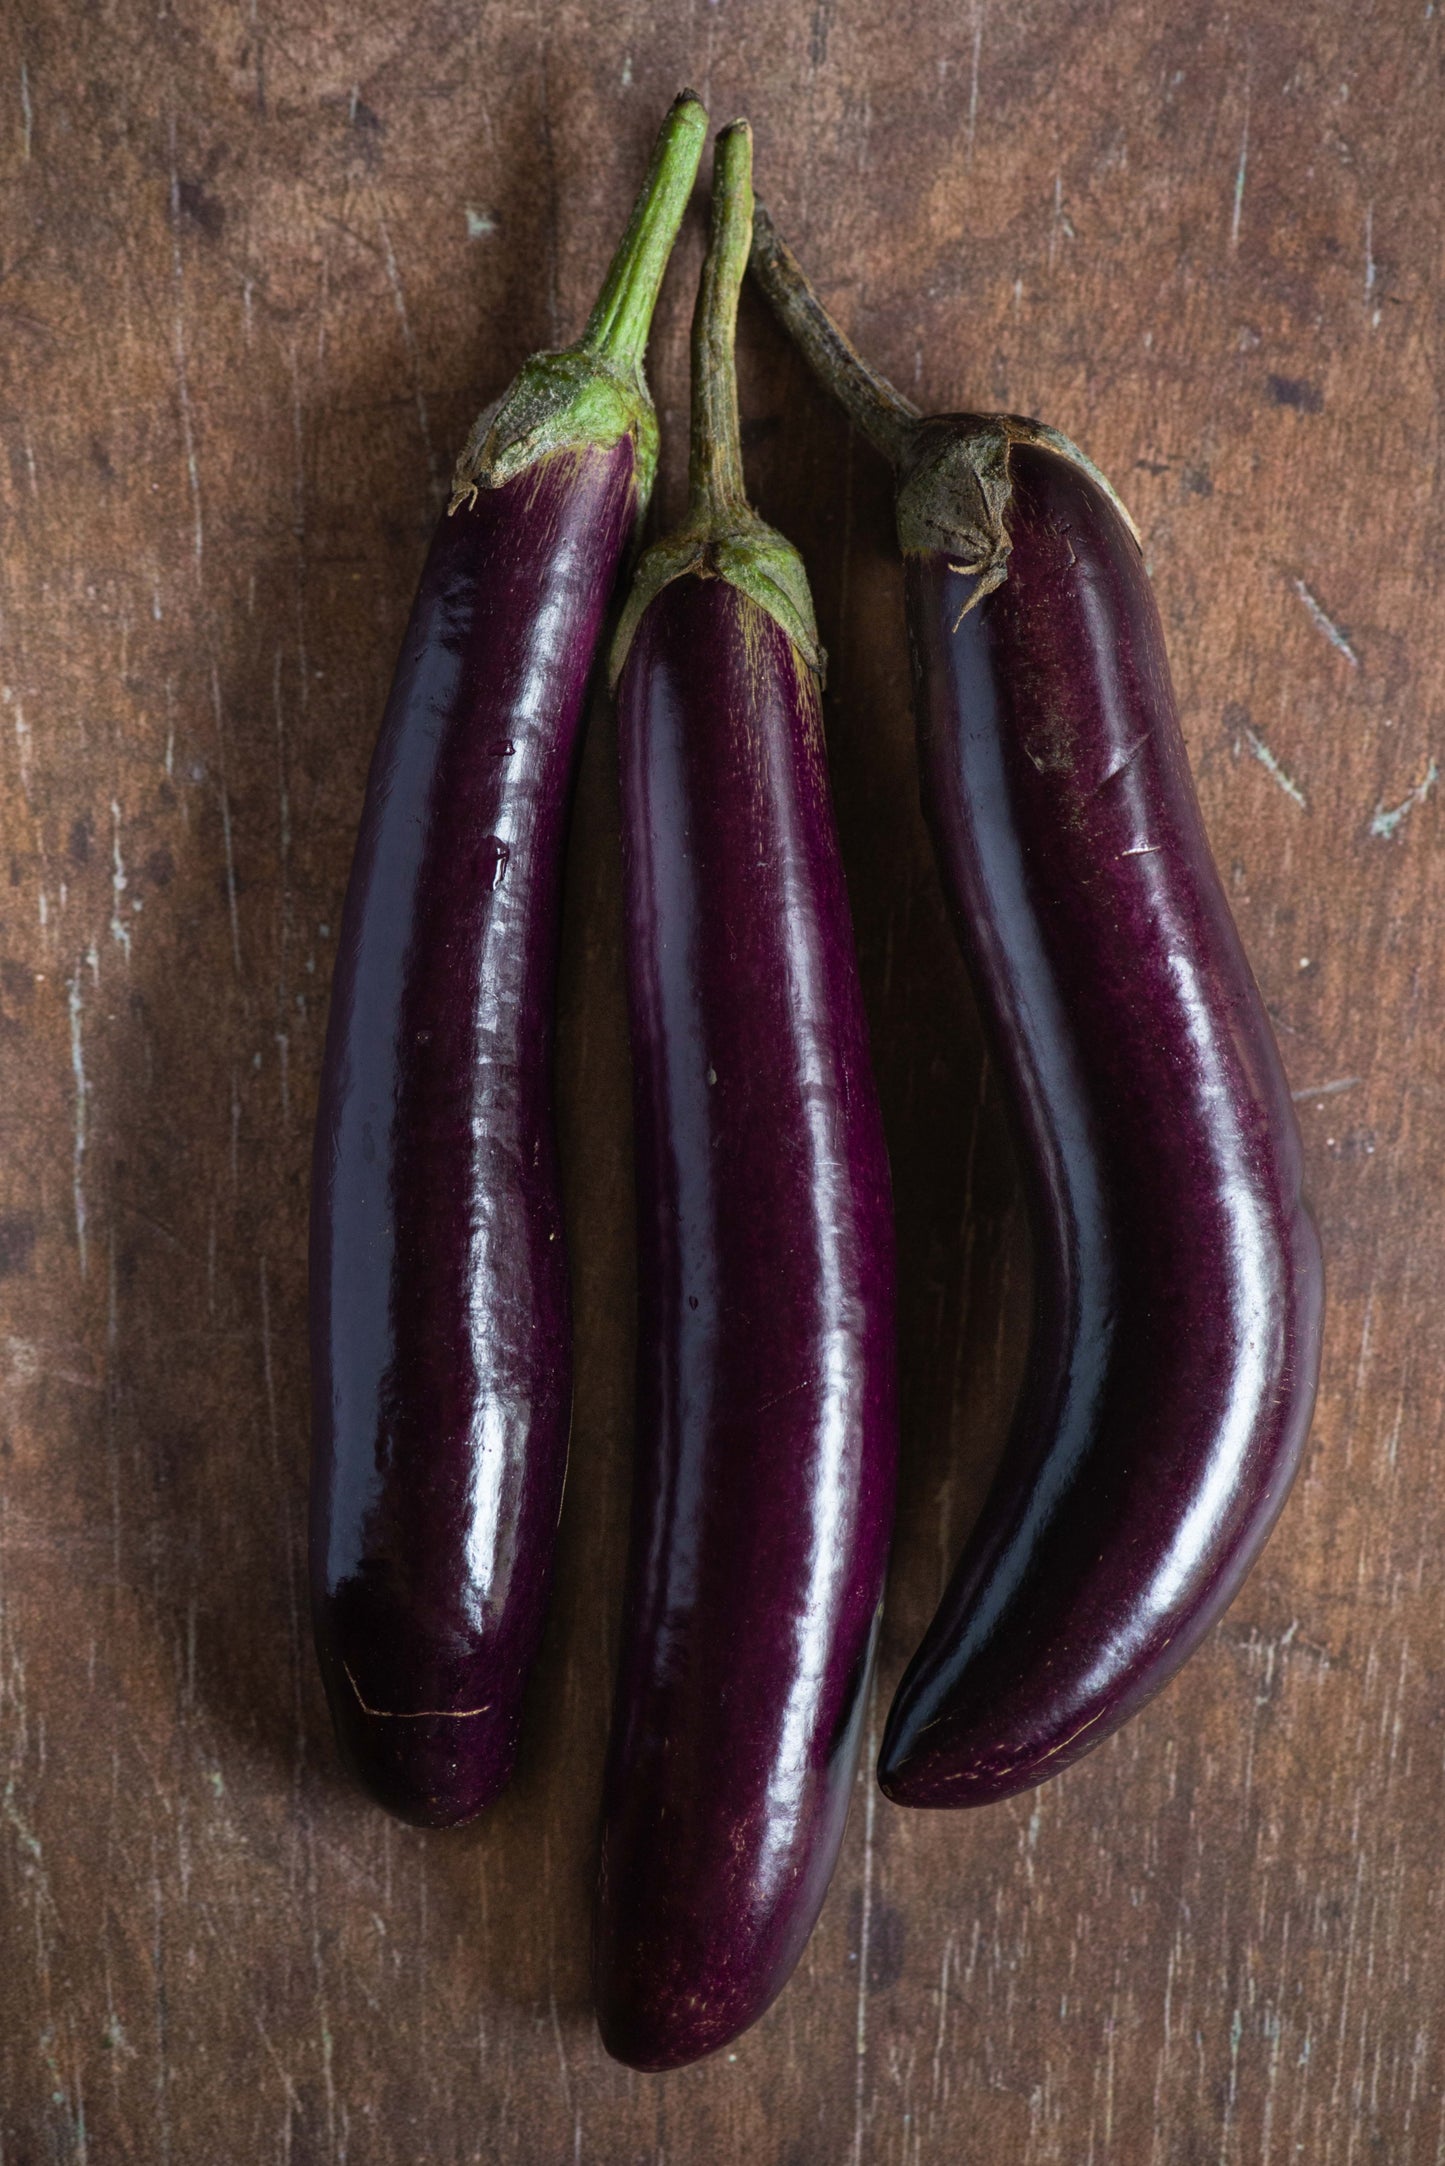 Eggplant, Long Purple